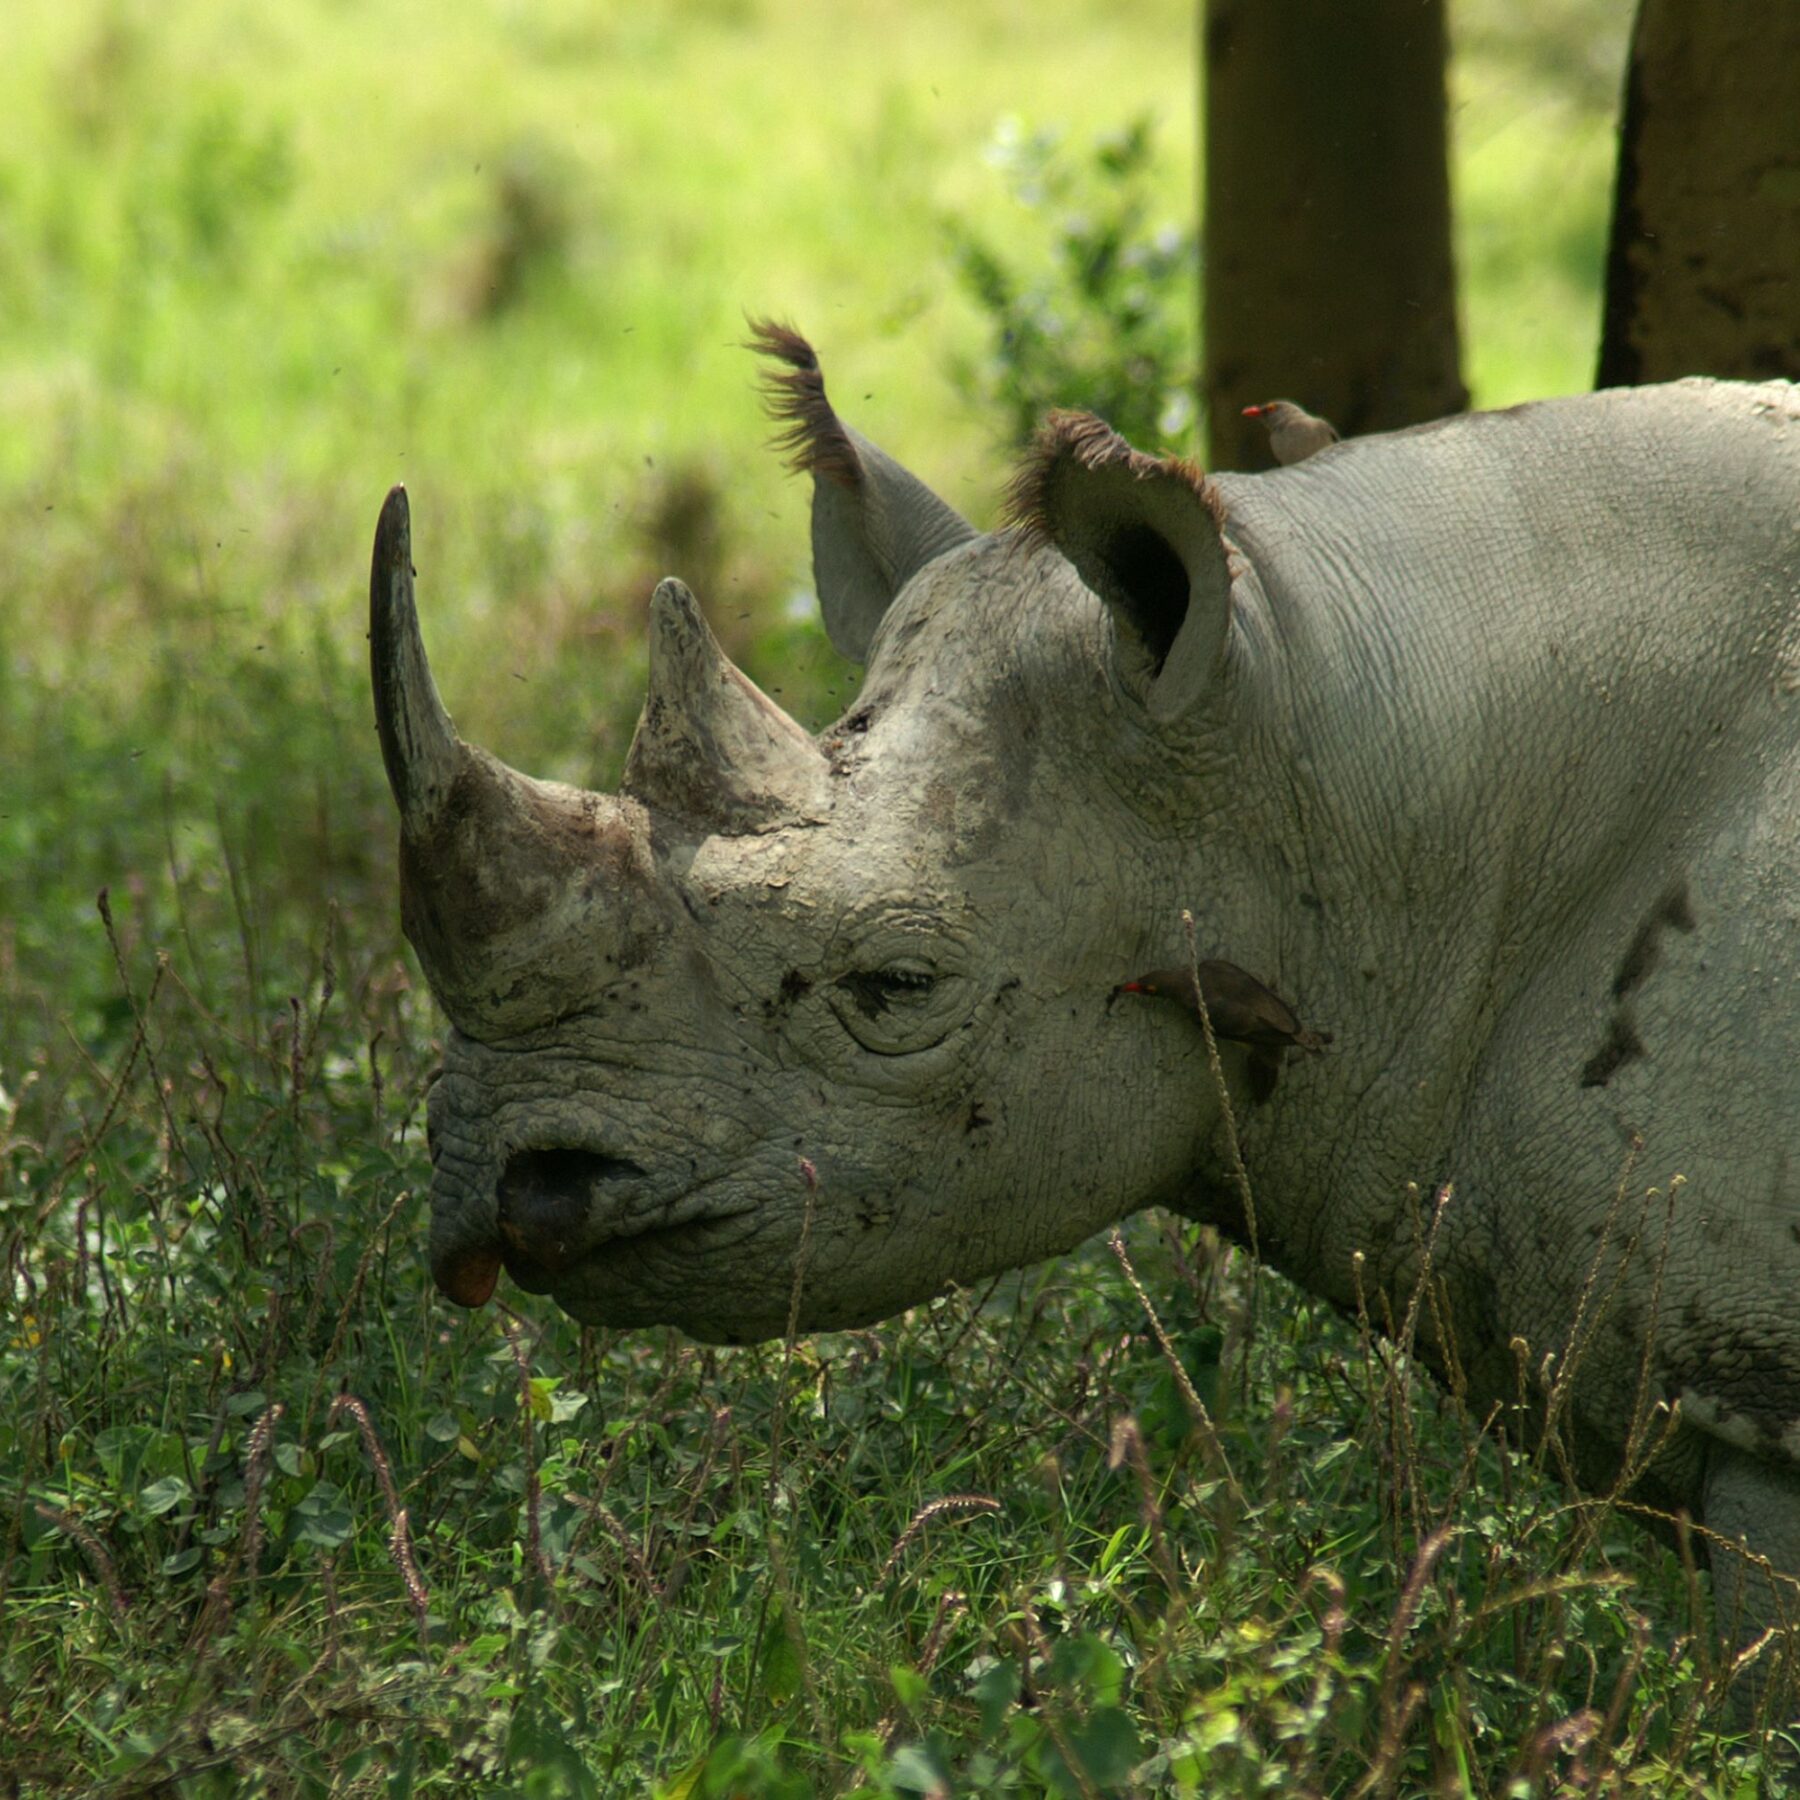 Black rhino standing in the green grass